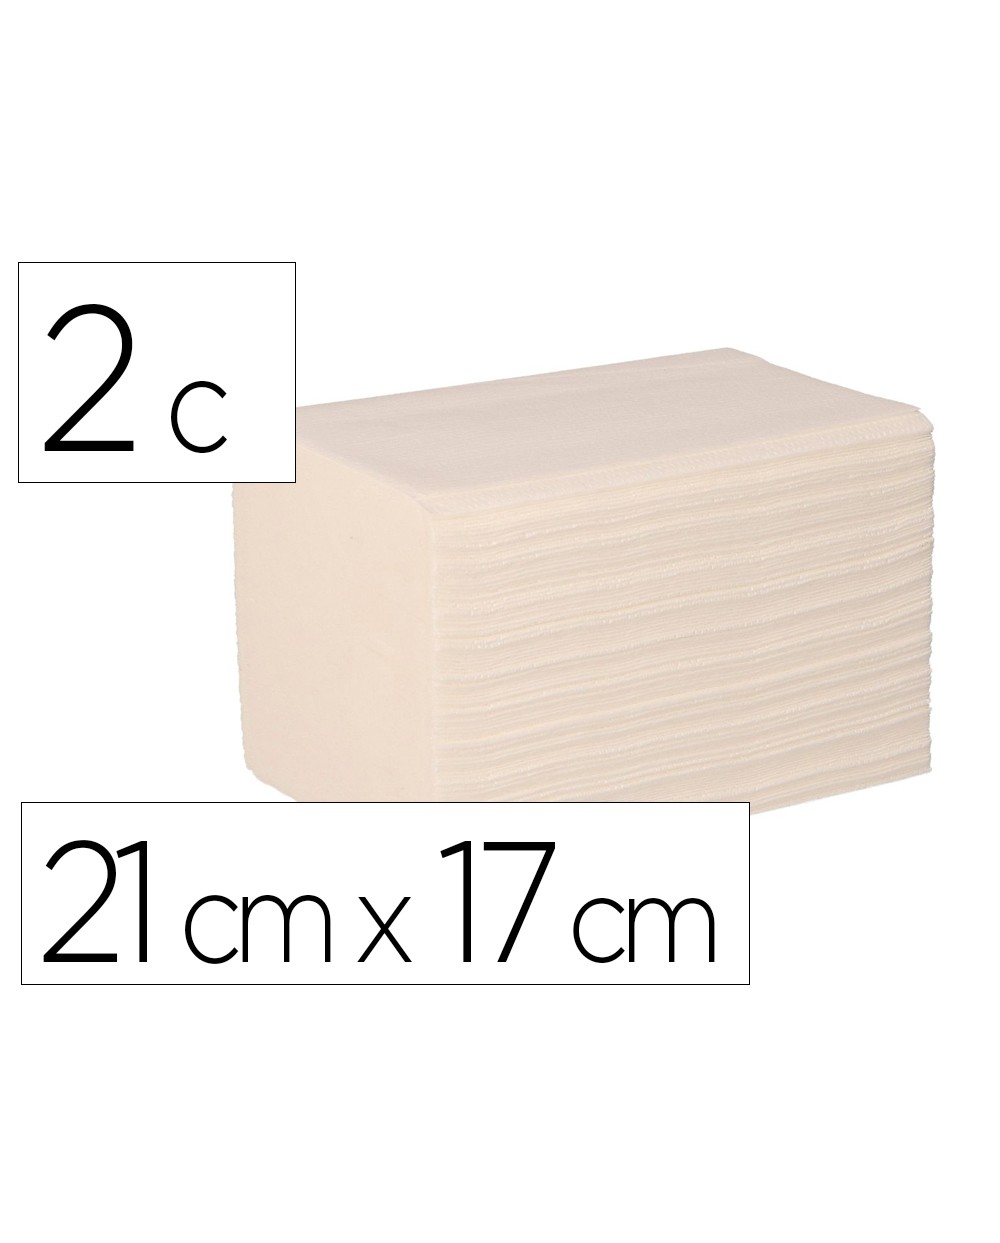 Servilleta bunzl greensource celulosa blanca plegado zig zag 2 capas 21x17 cm caja de 9000 unidades